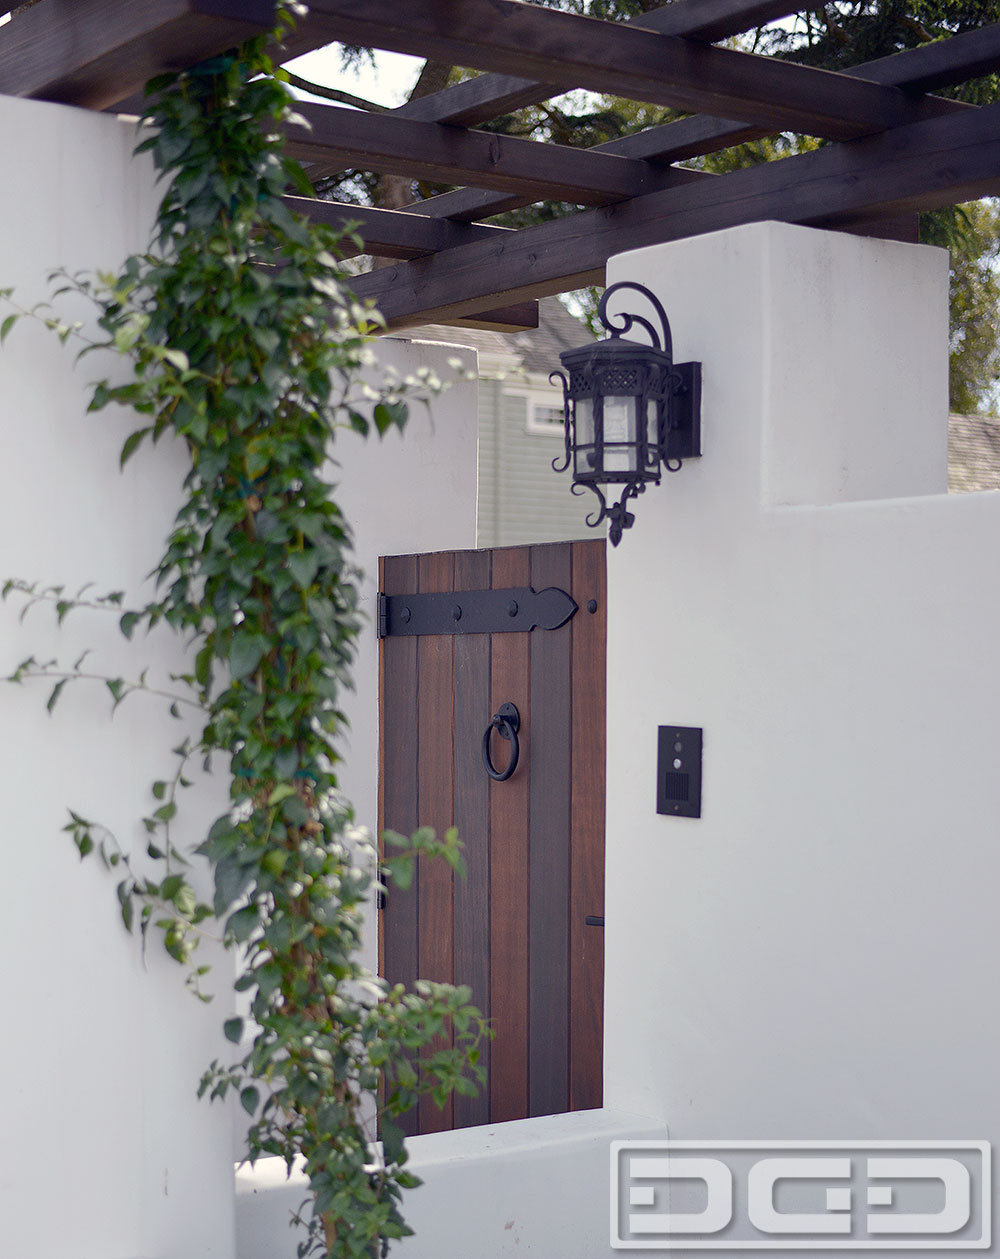 Old World, Spanish Style Garden Gates